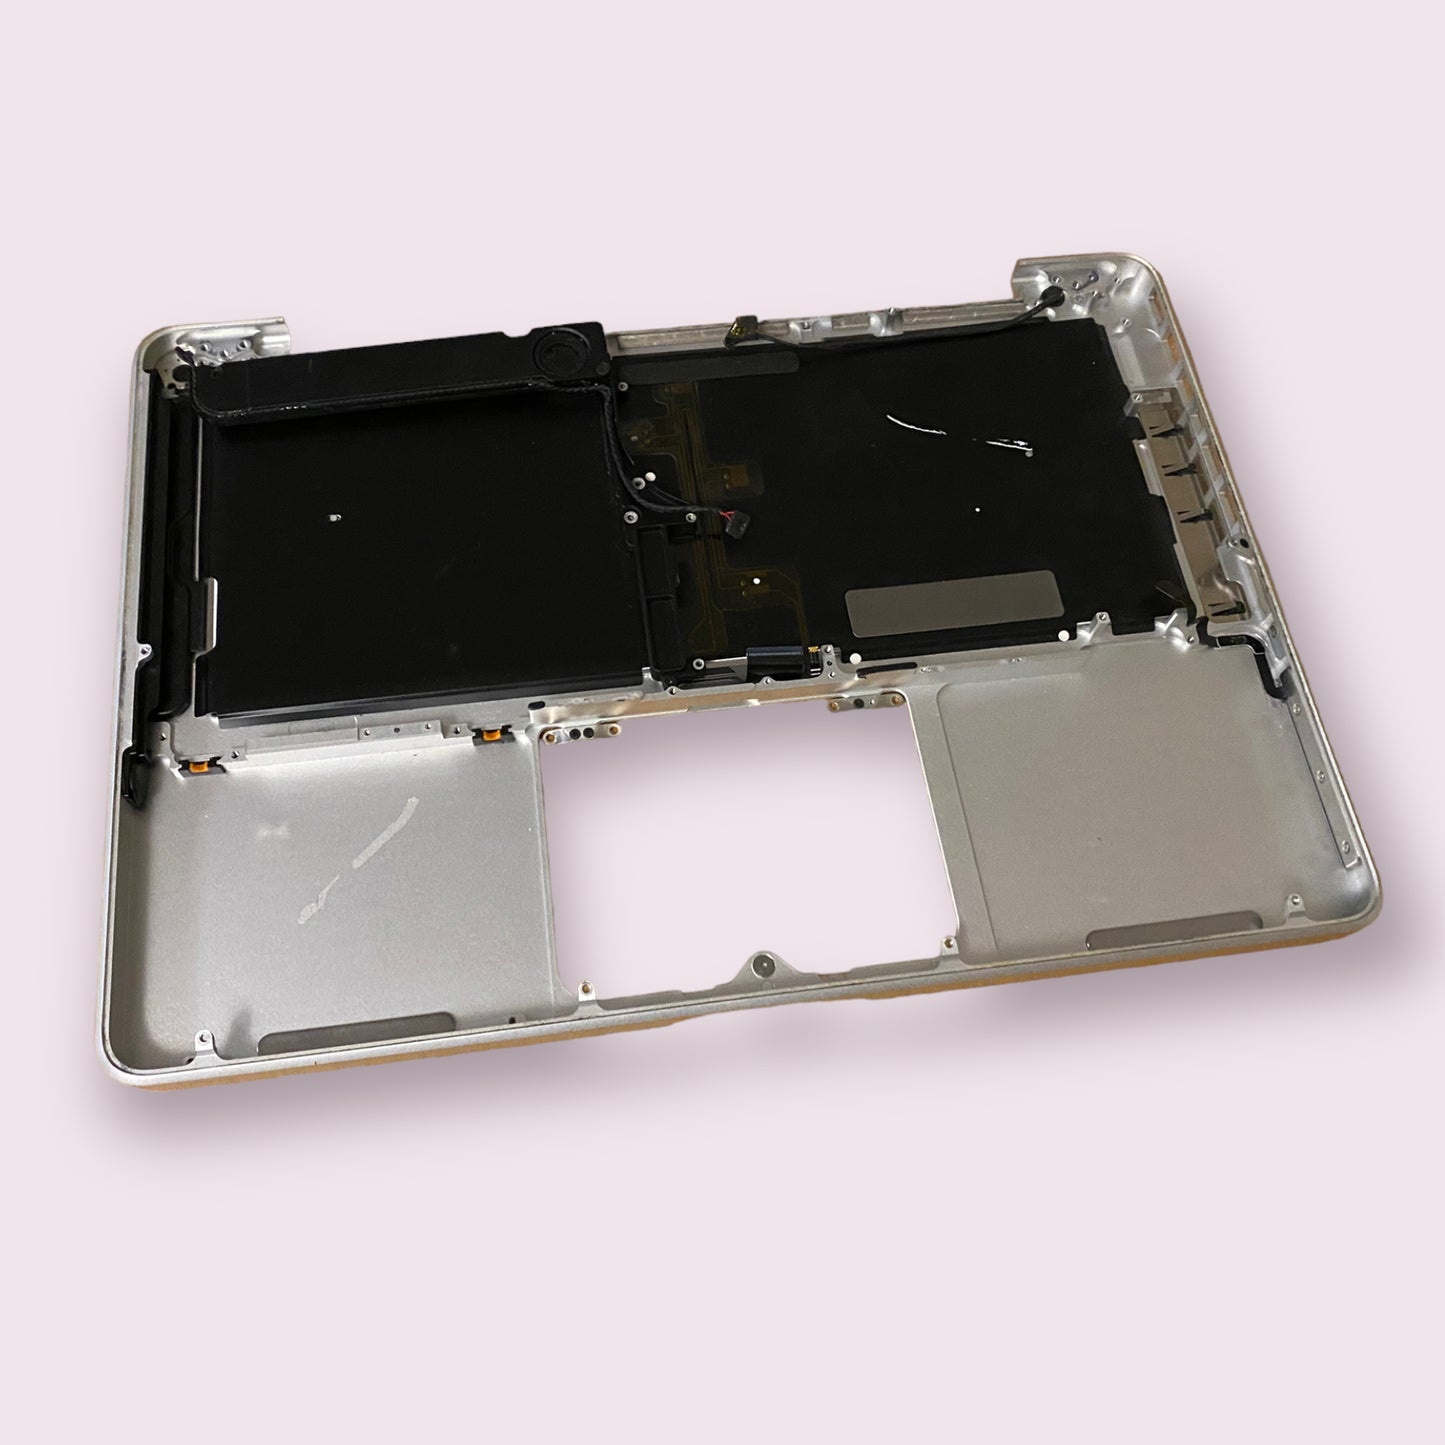 MacBook Pro 13" 2009 2010 A1278 Palmrest Keyboard Assembly Palm rest - Silver - Genuine Pull Part